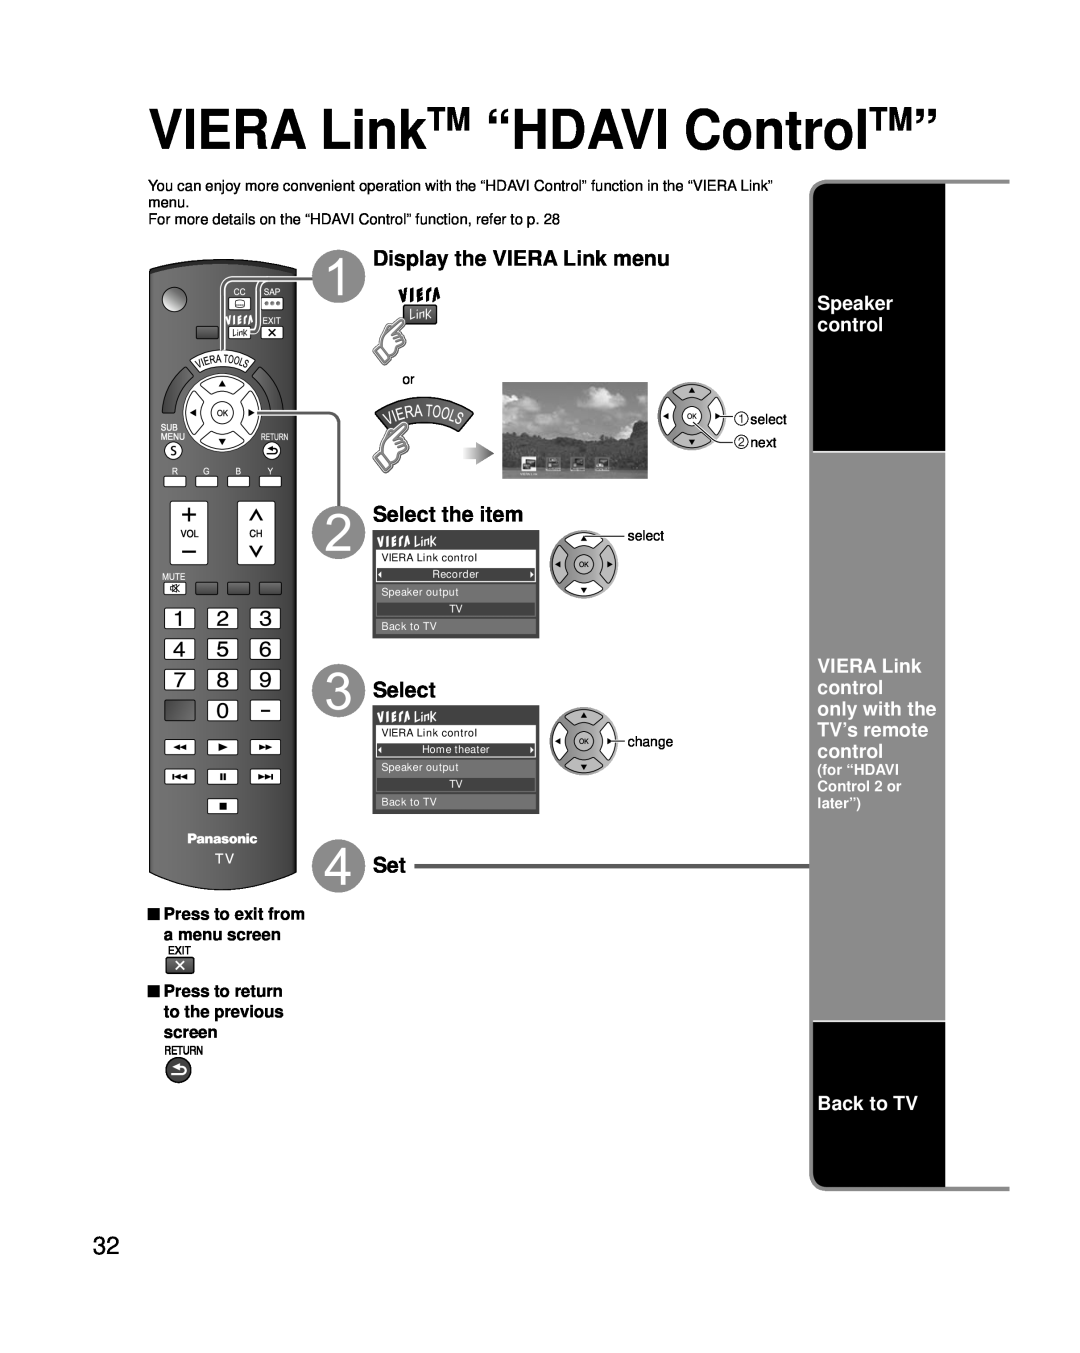 Panasonic TC-P42U2 Display the VIERA Link menu, Select, Speaker control, Back to TV, Press to exit from a menu screen 